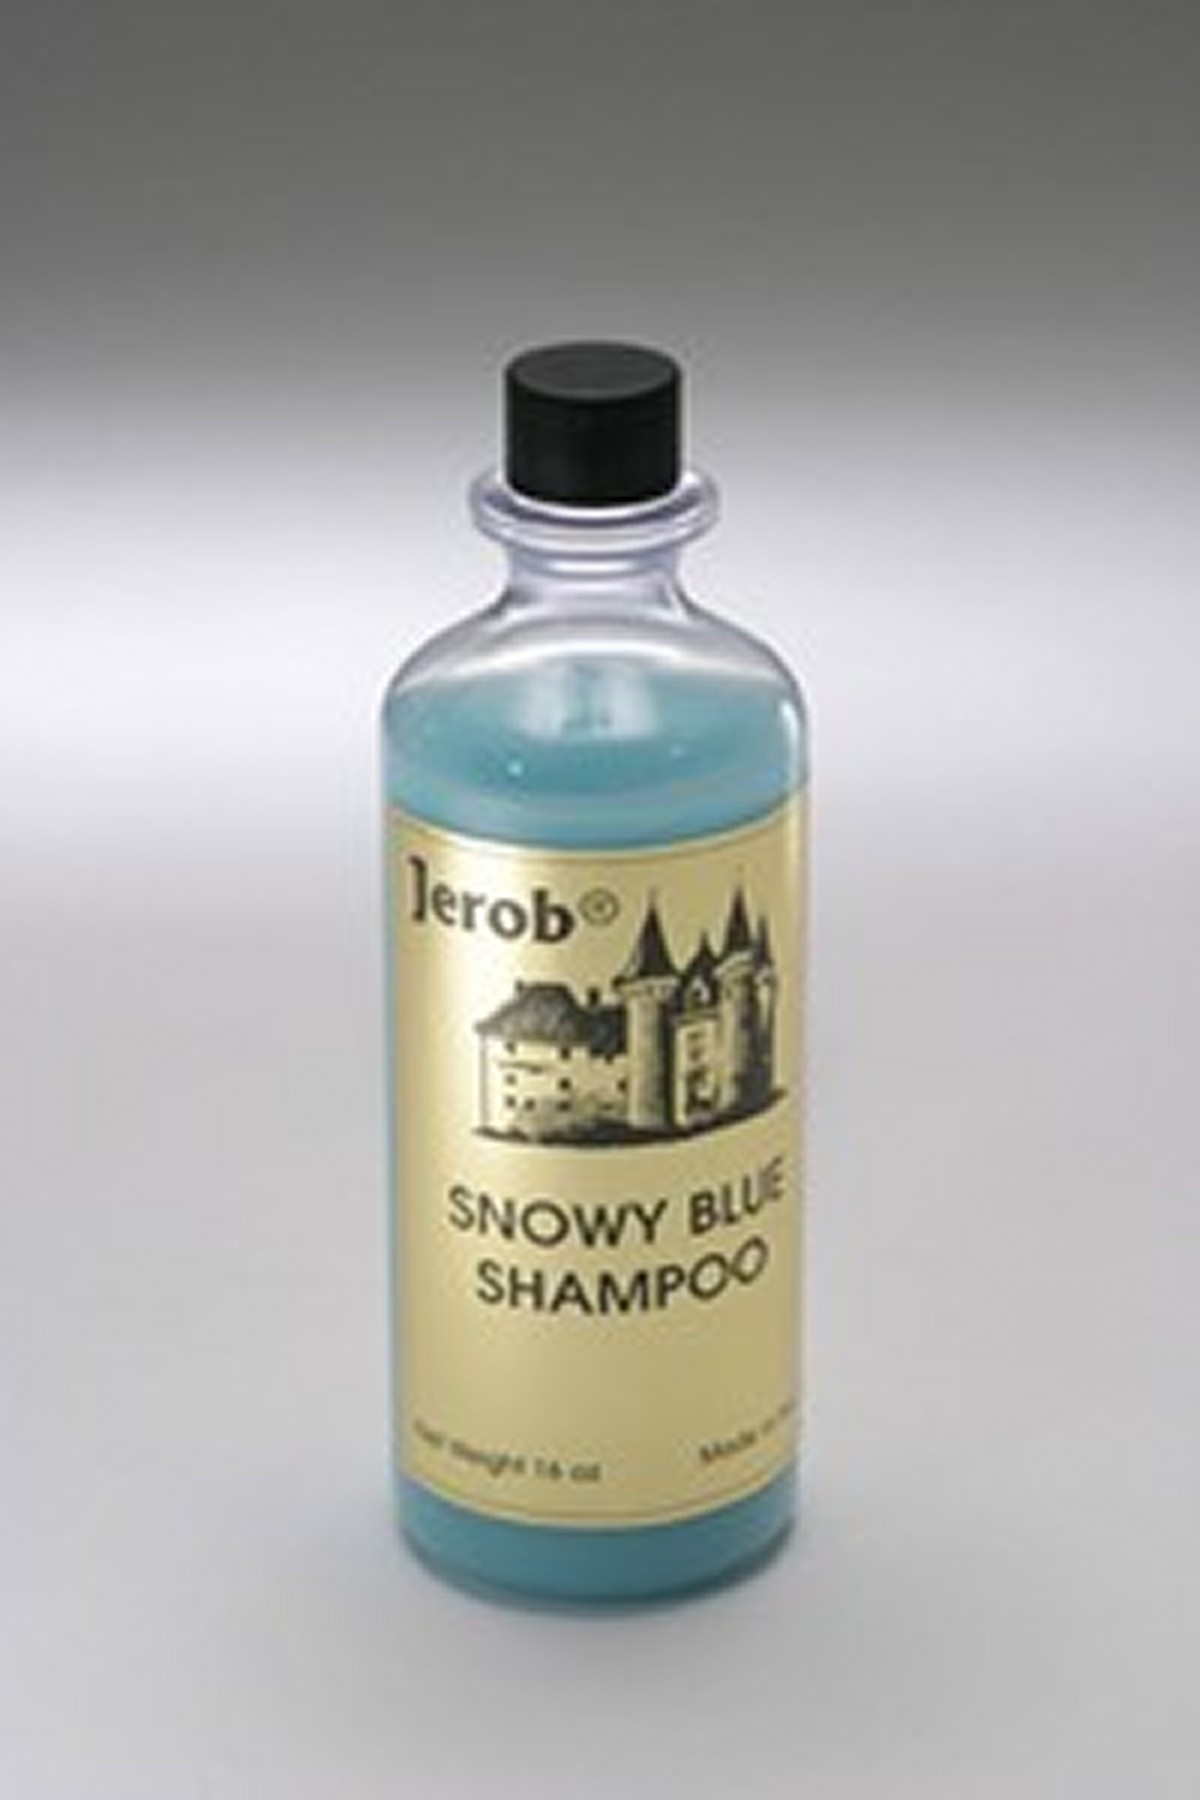 Jerob Shampoo Snowy Blue 473 ml